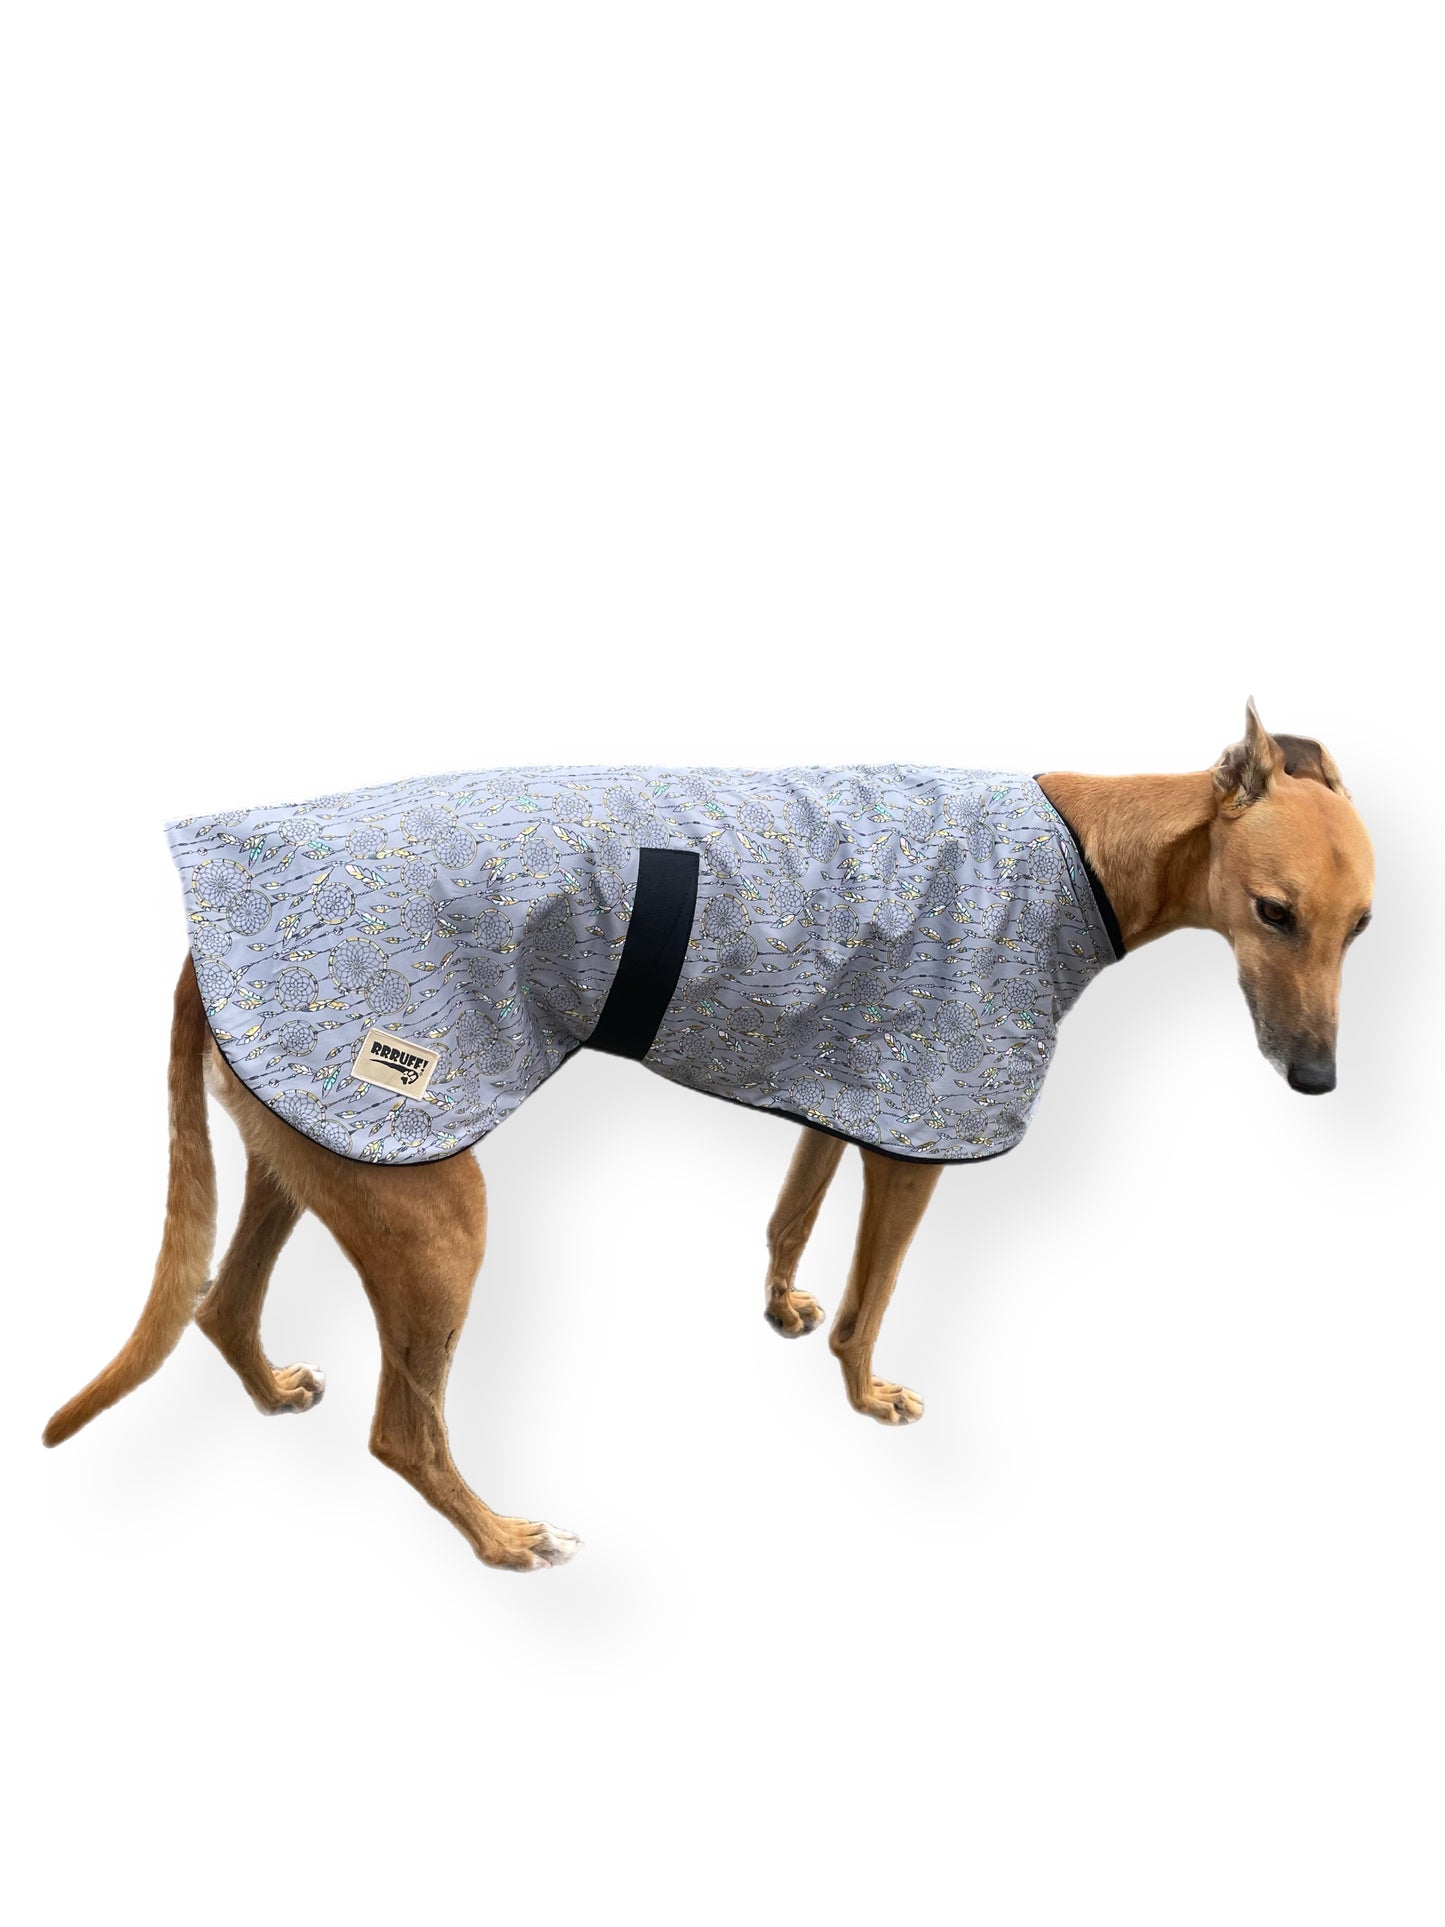 Dream catcher Autumn range classic style Greyhound coat in cotton & fleece washable